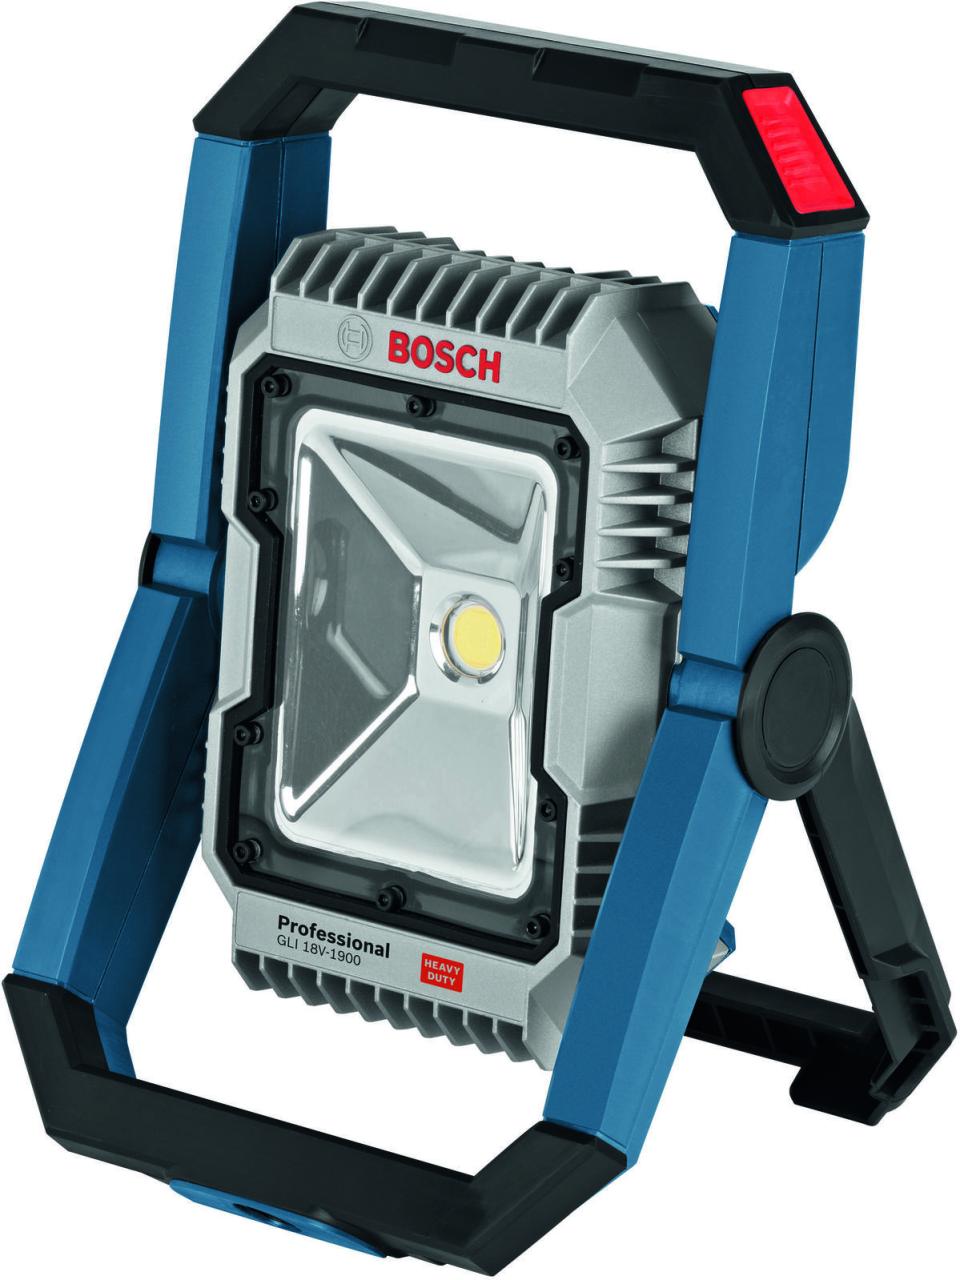 Bosch GLI 18V-1900 Baustrahler von BOSCH Professional